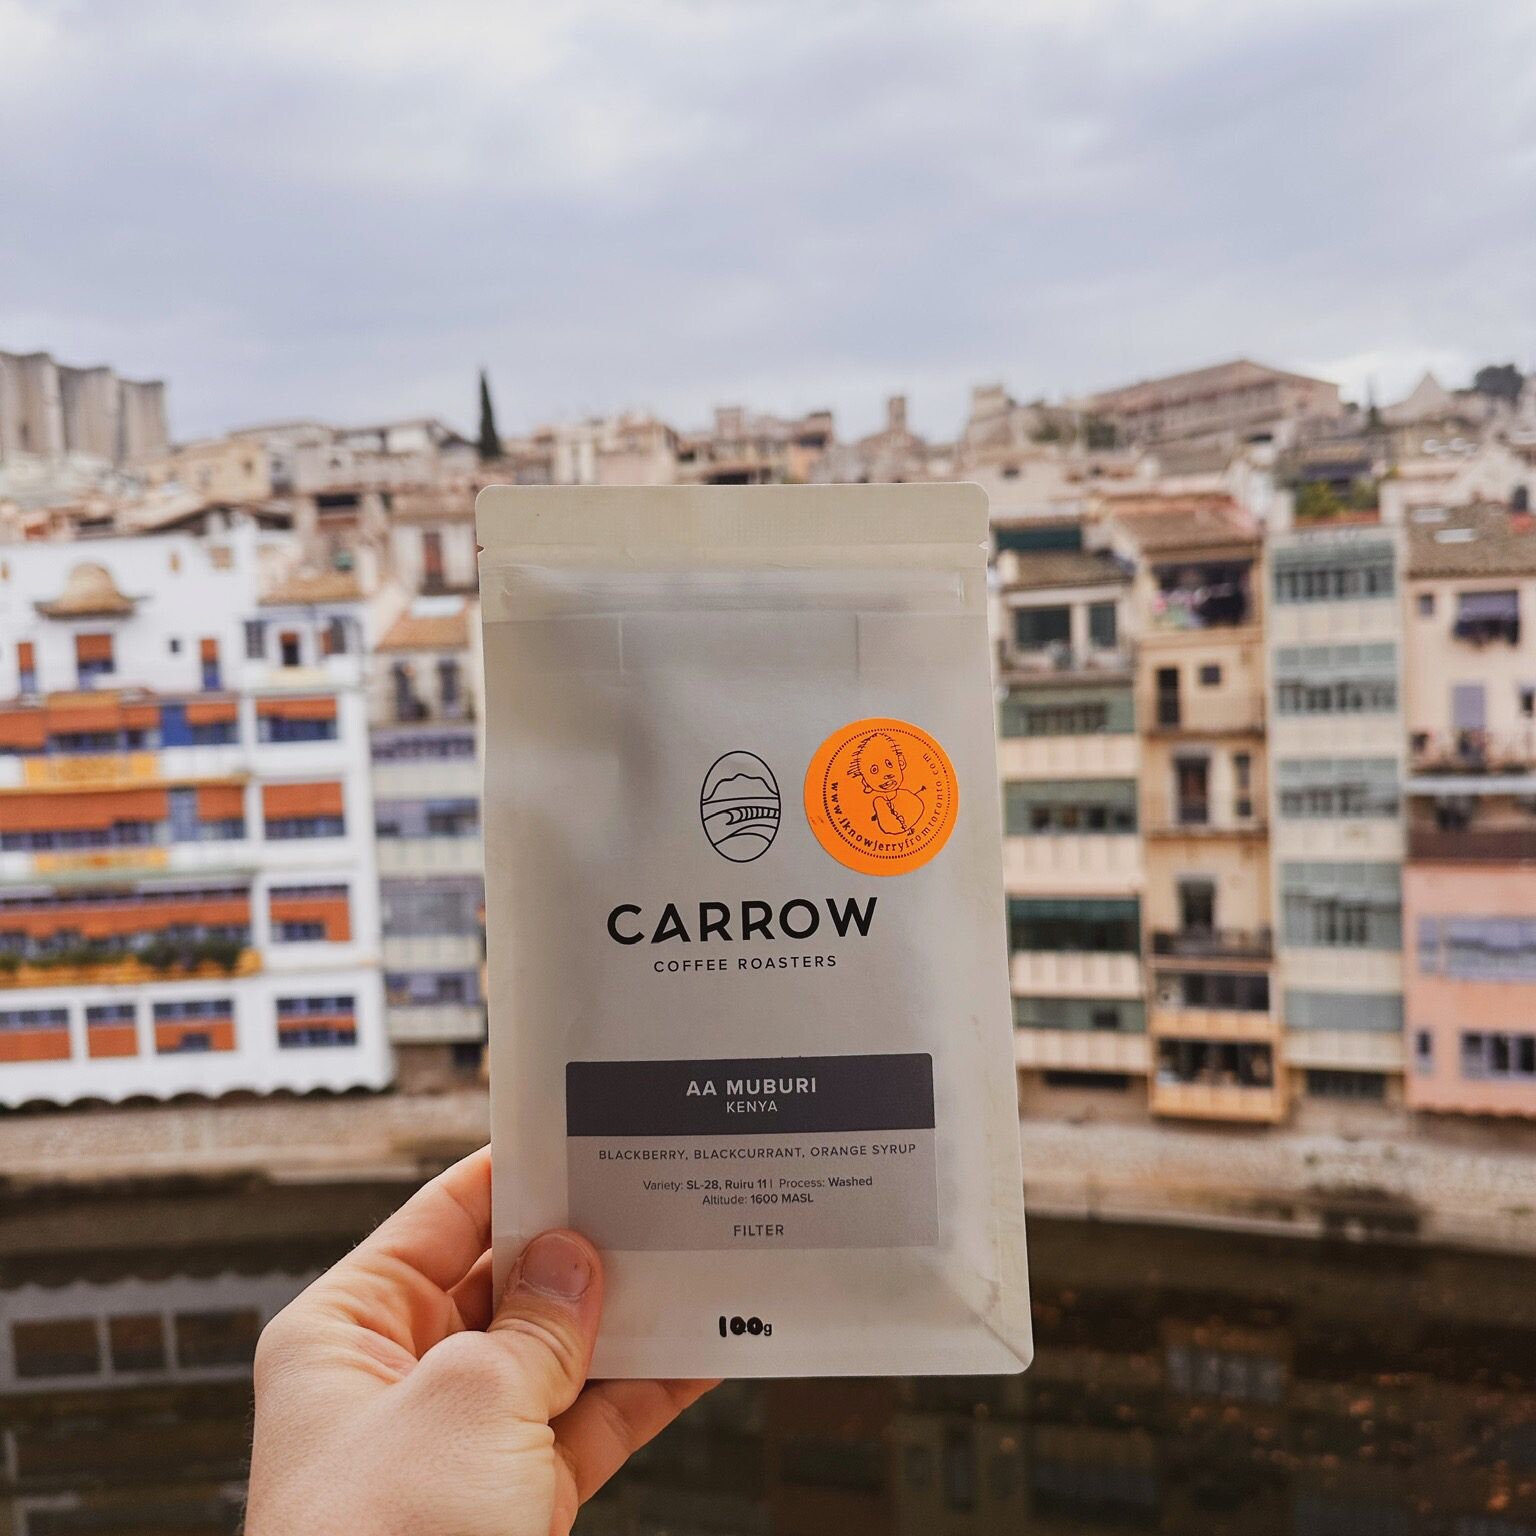 Bag of Carrow coffee beans